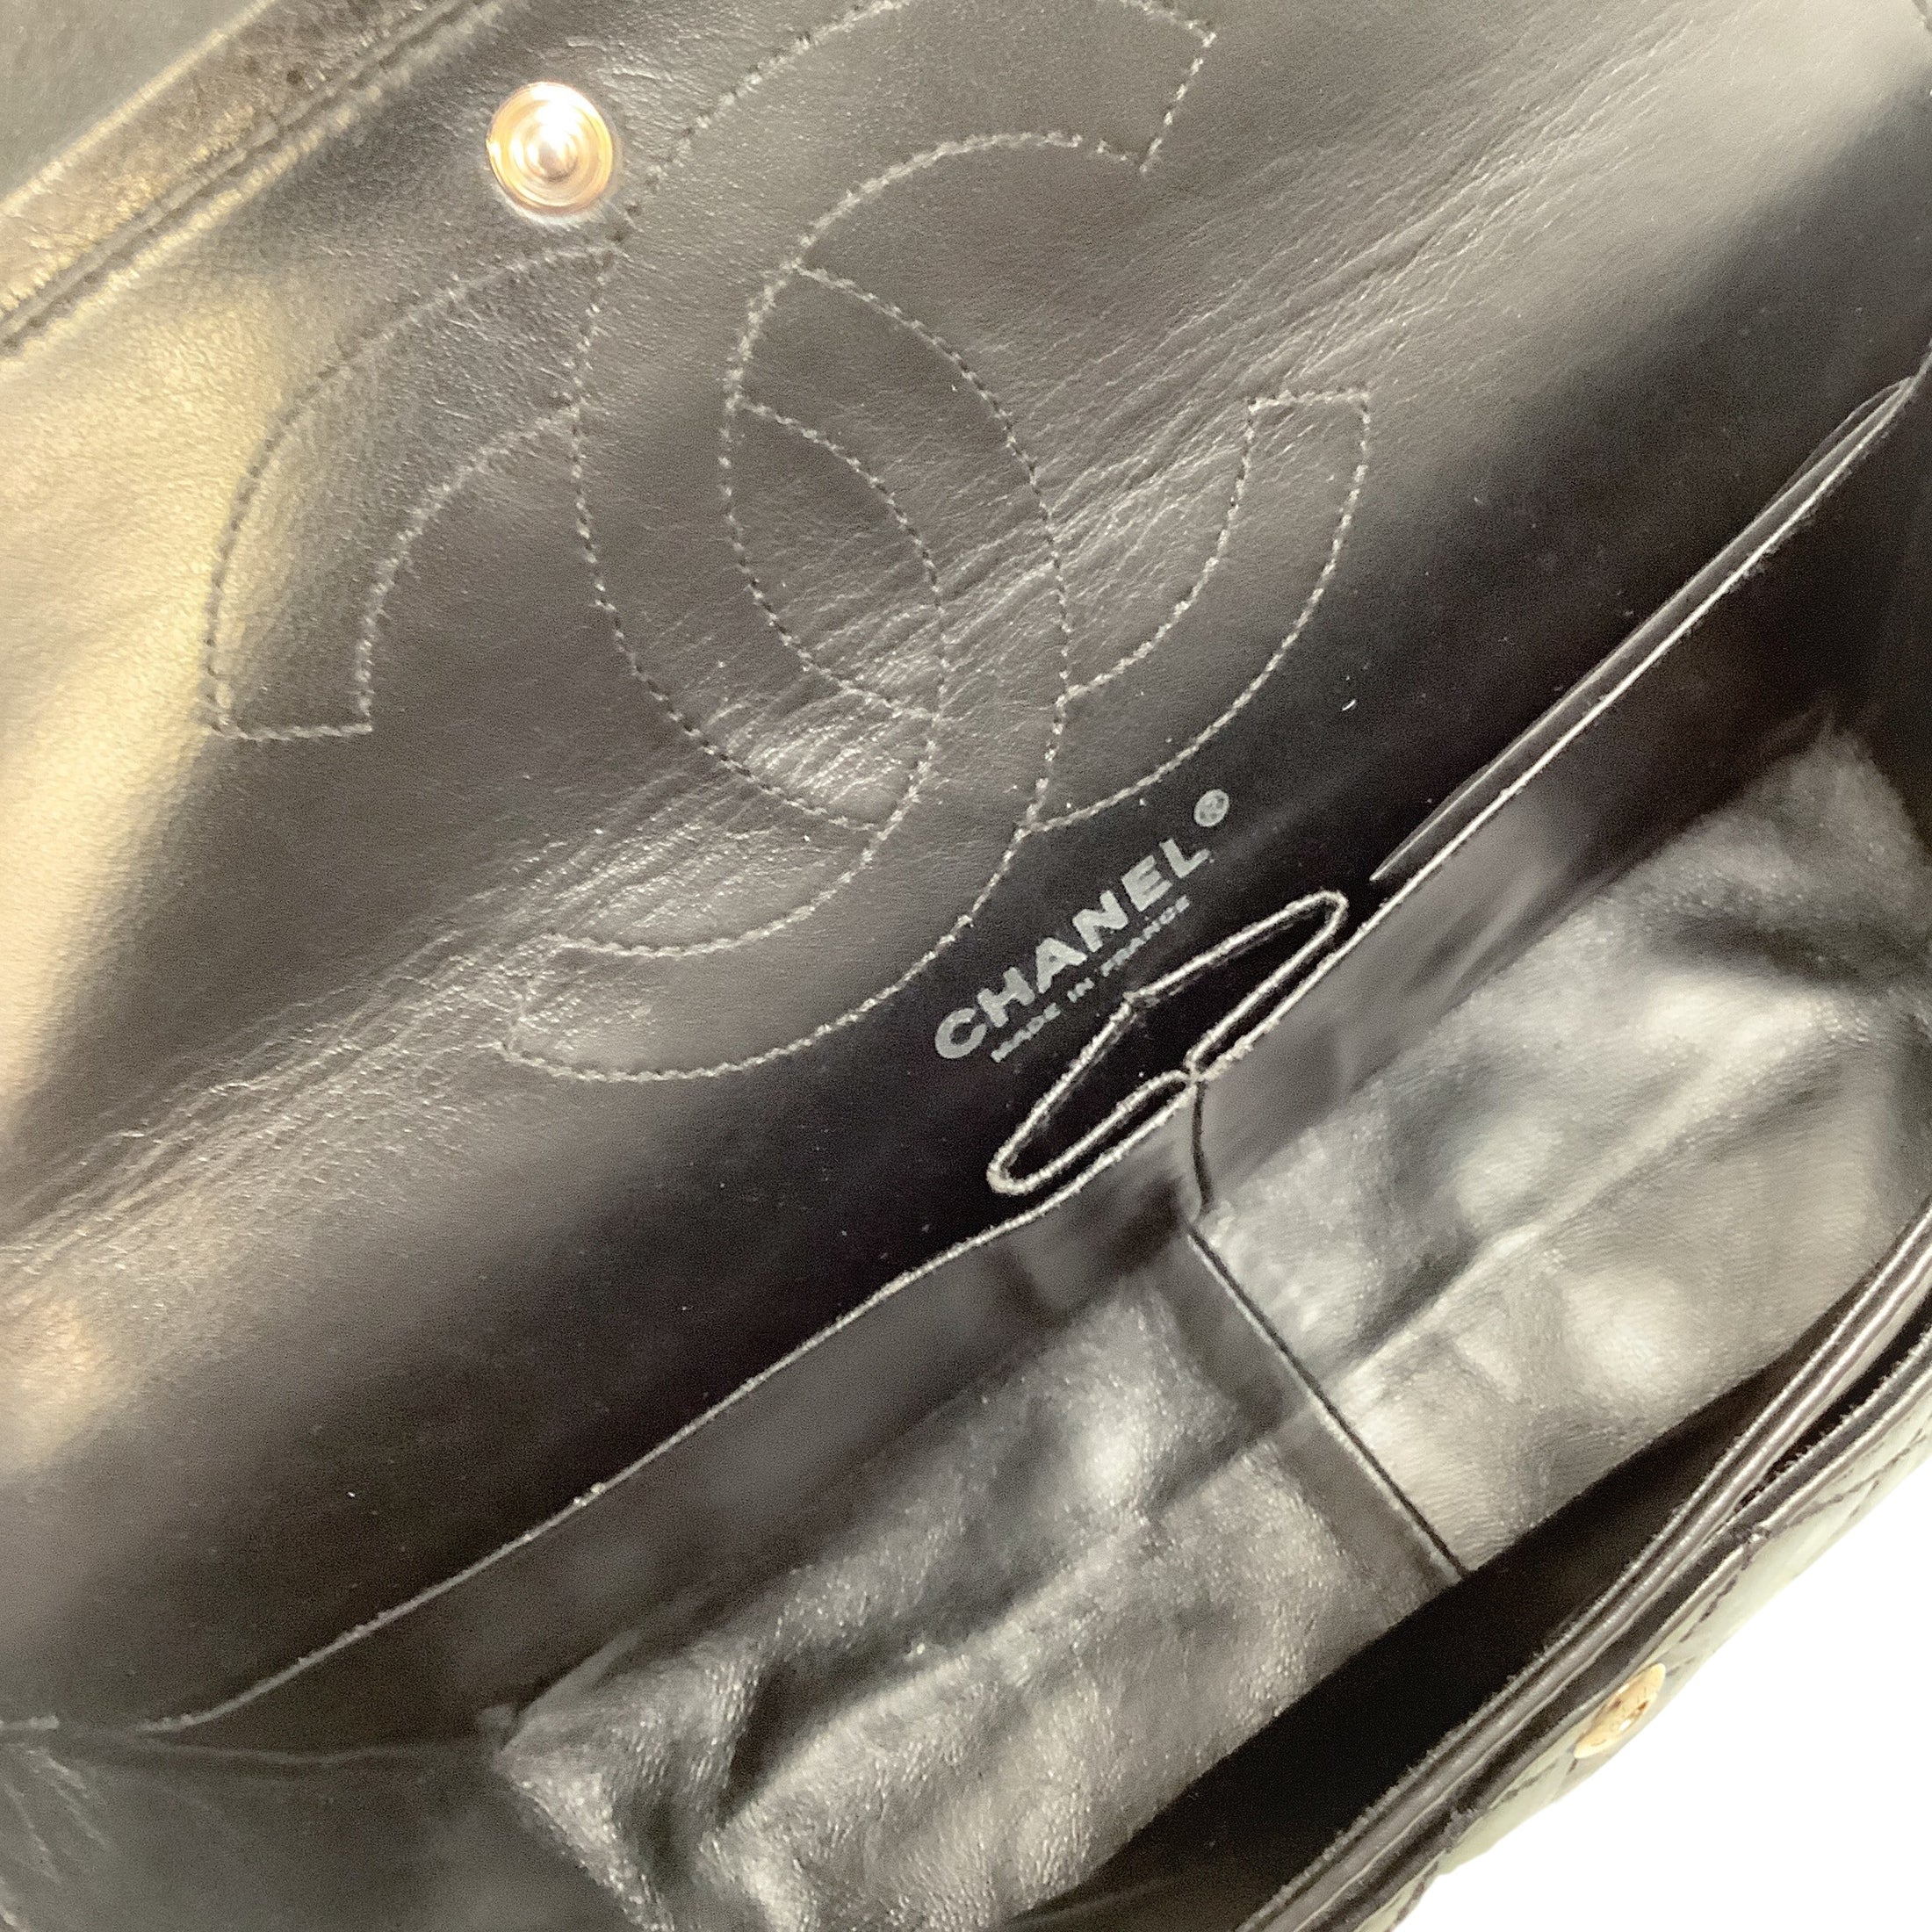 Chanel Black Metallic Leather Double Flap Shoulder Bag